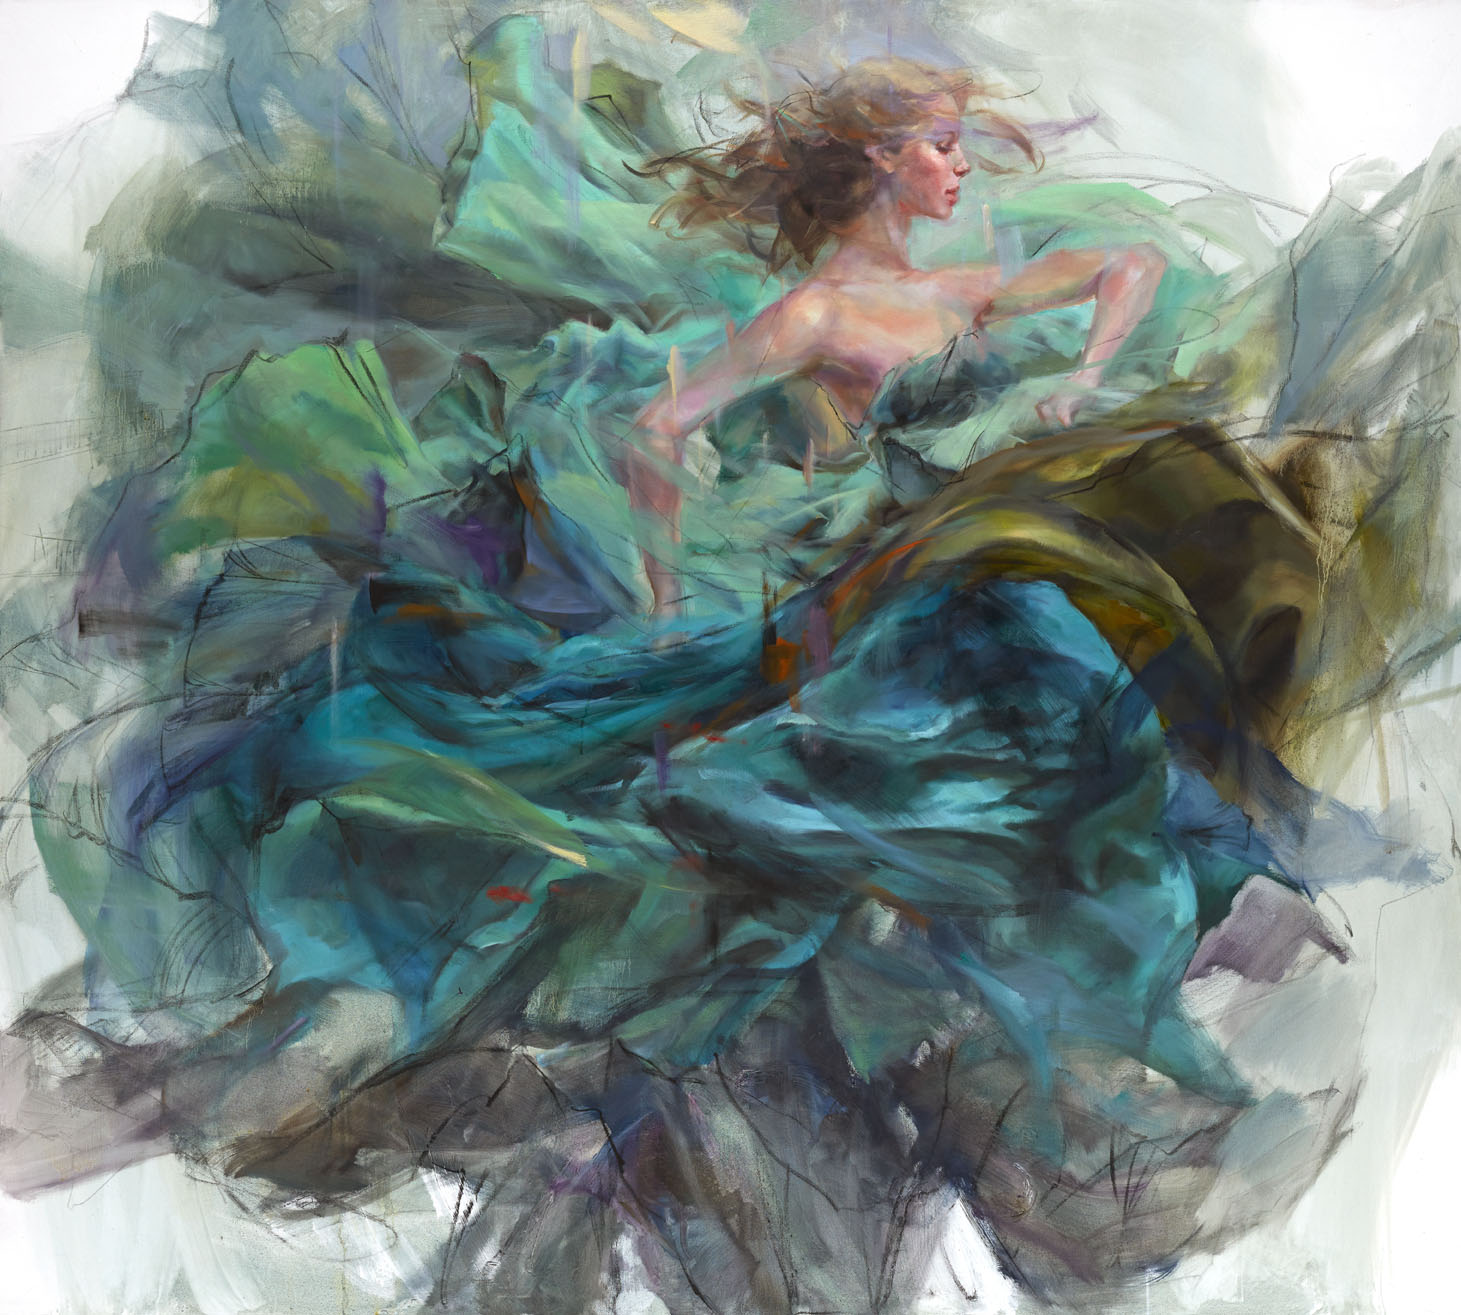 Anna Razumovskaya: Emerald splendor